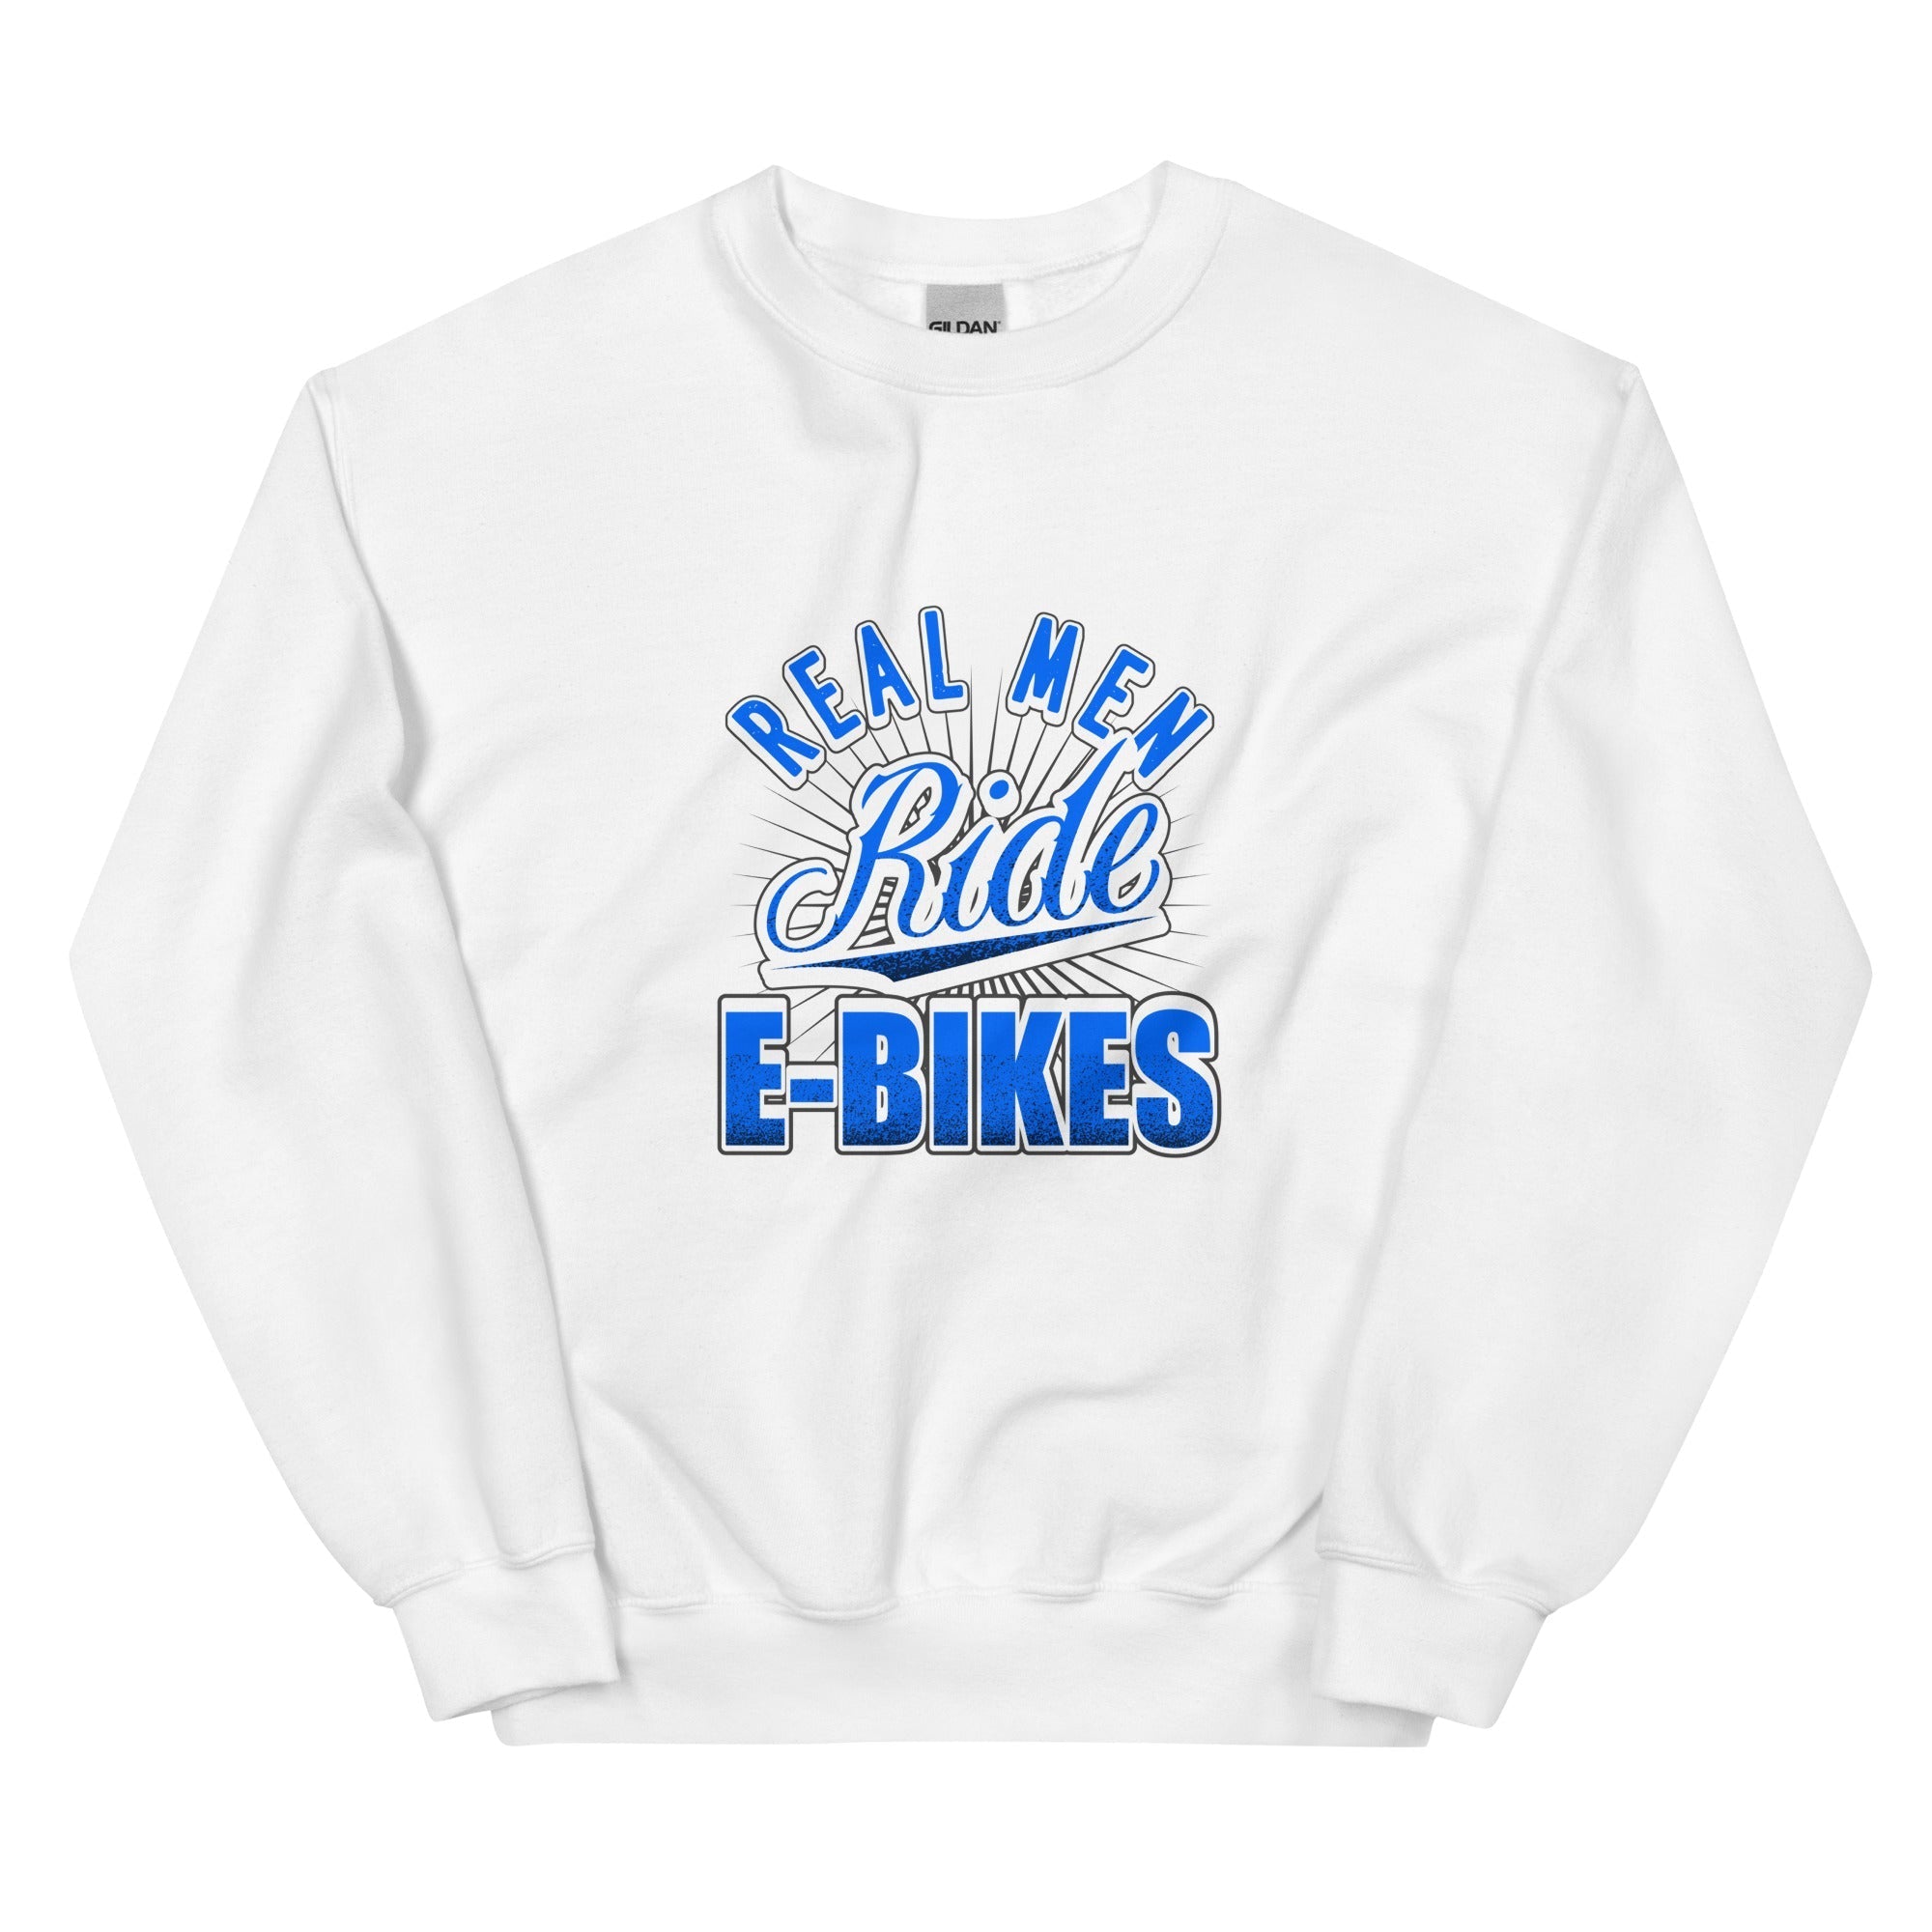 Real Men Ride E-bikes Gildan 18000 Men's Sweatshirt White